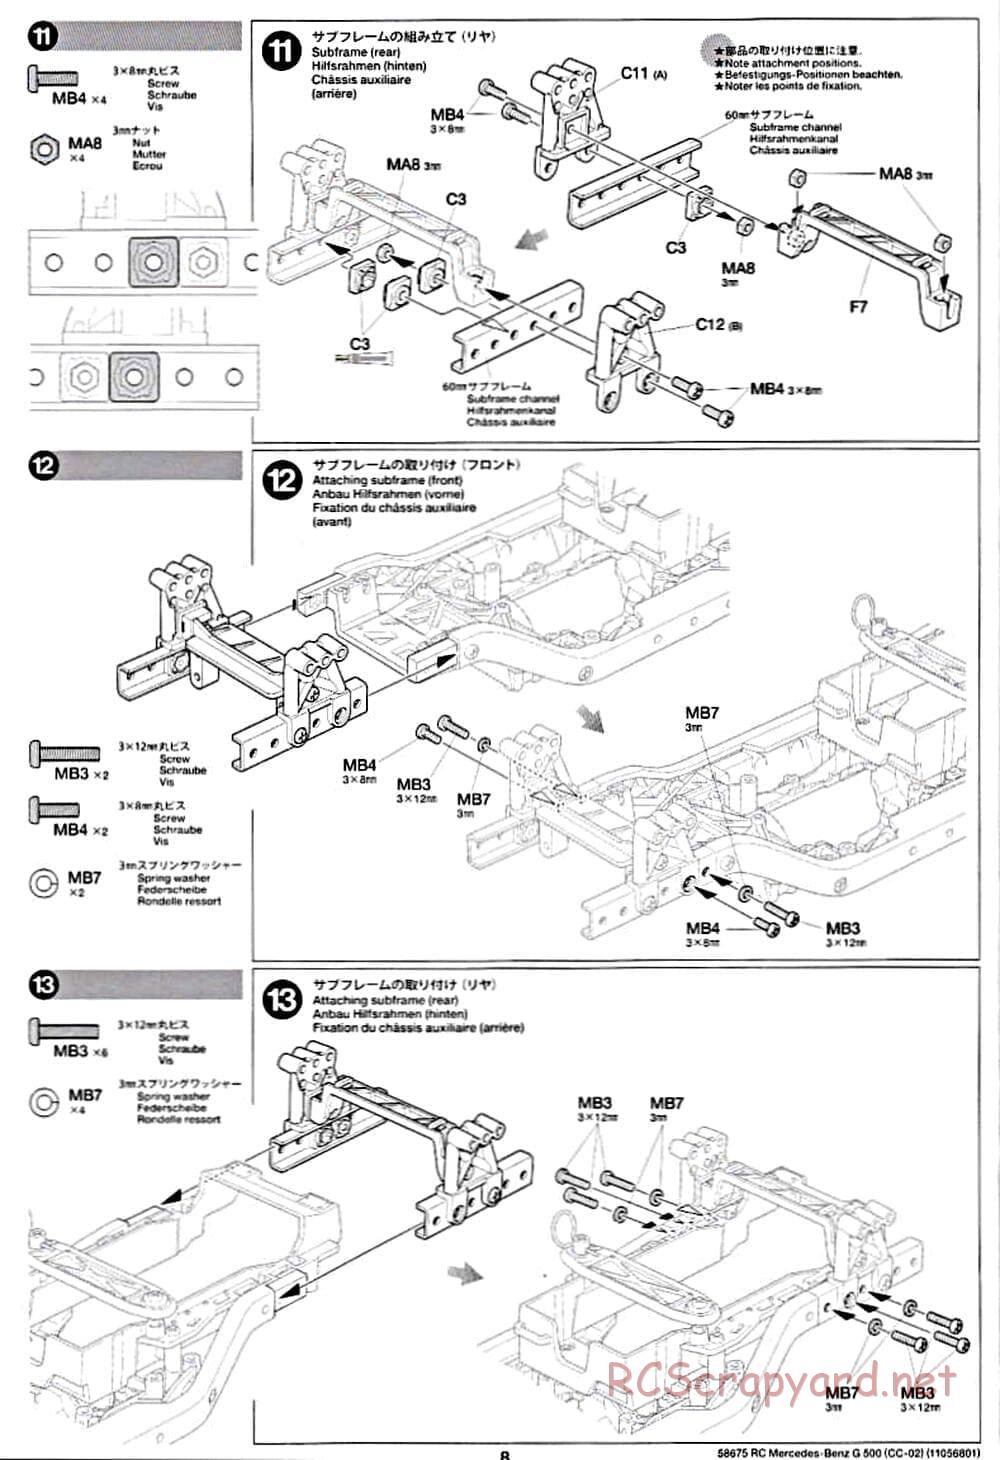 Tamiya - Mercedes-Benz G500 - CC-02 Chassis - Manual - Page 8